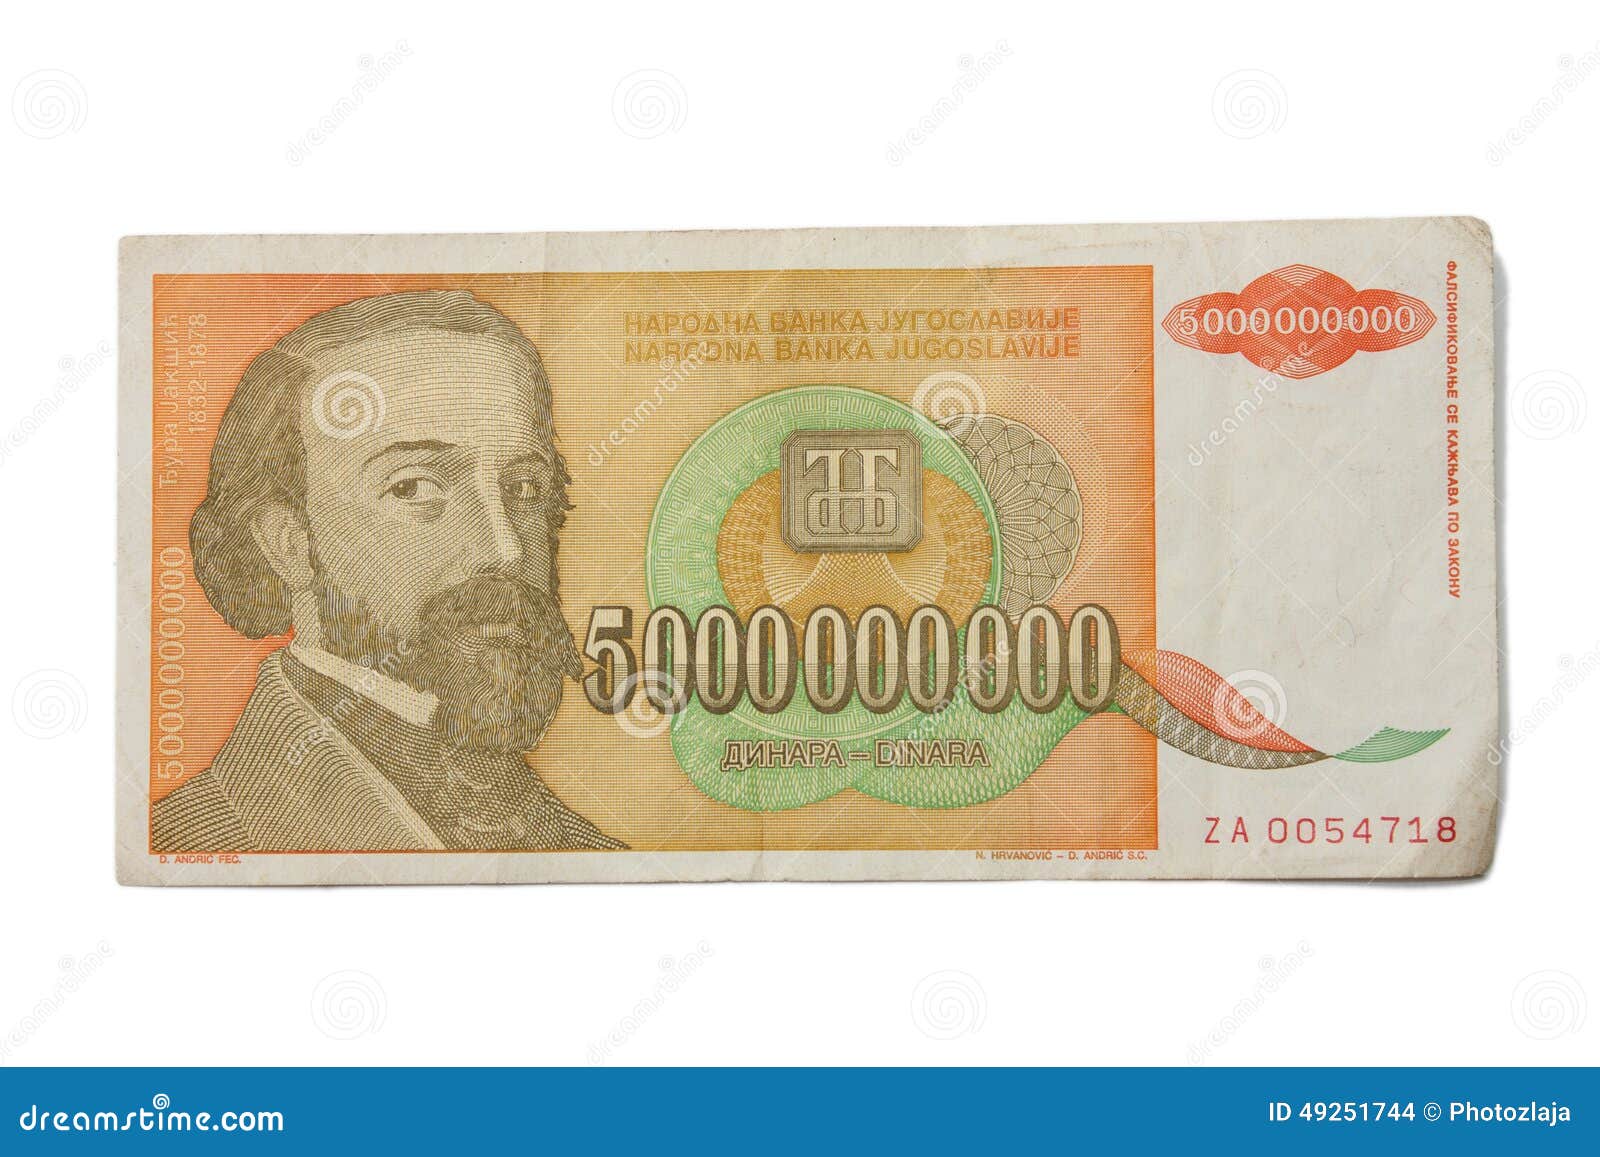 banknote of 5 billion dinars from yugoslavia